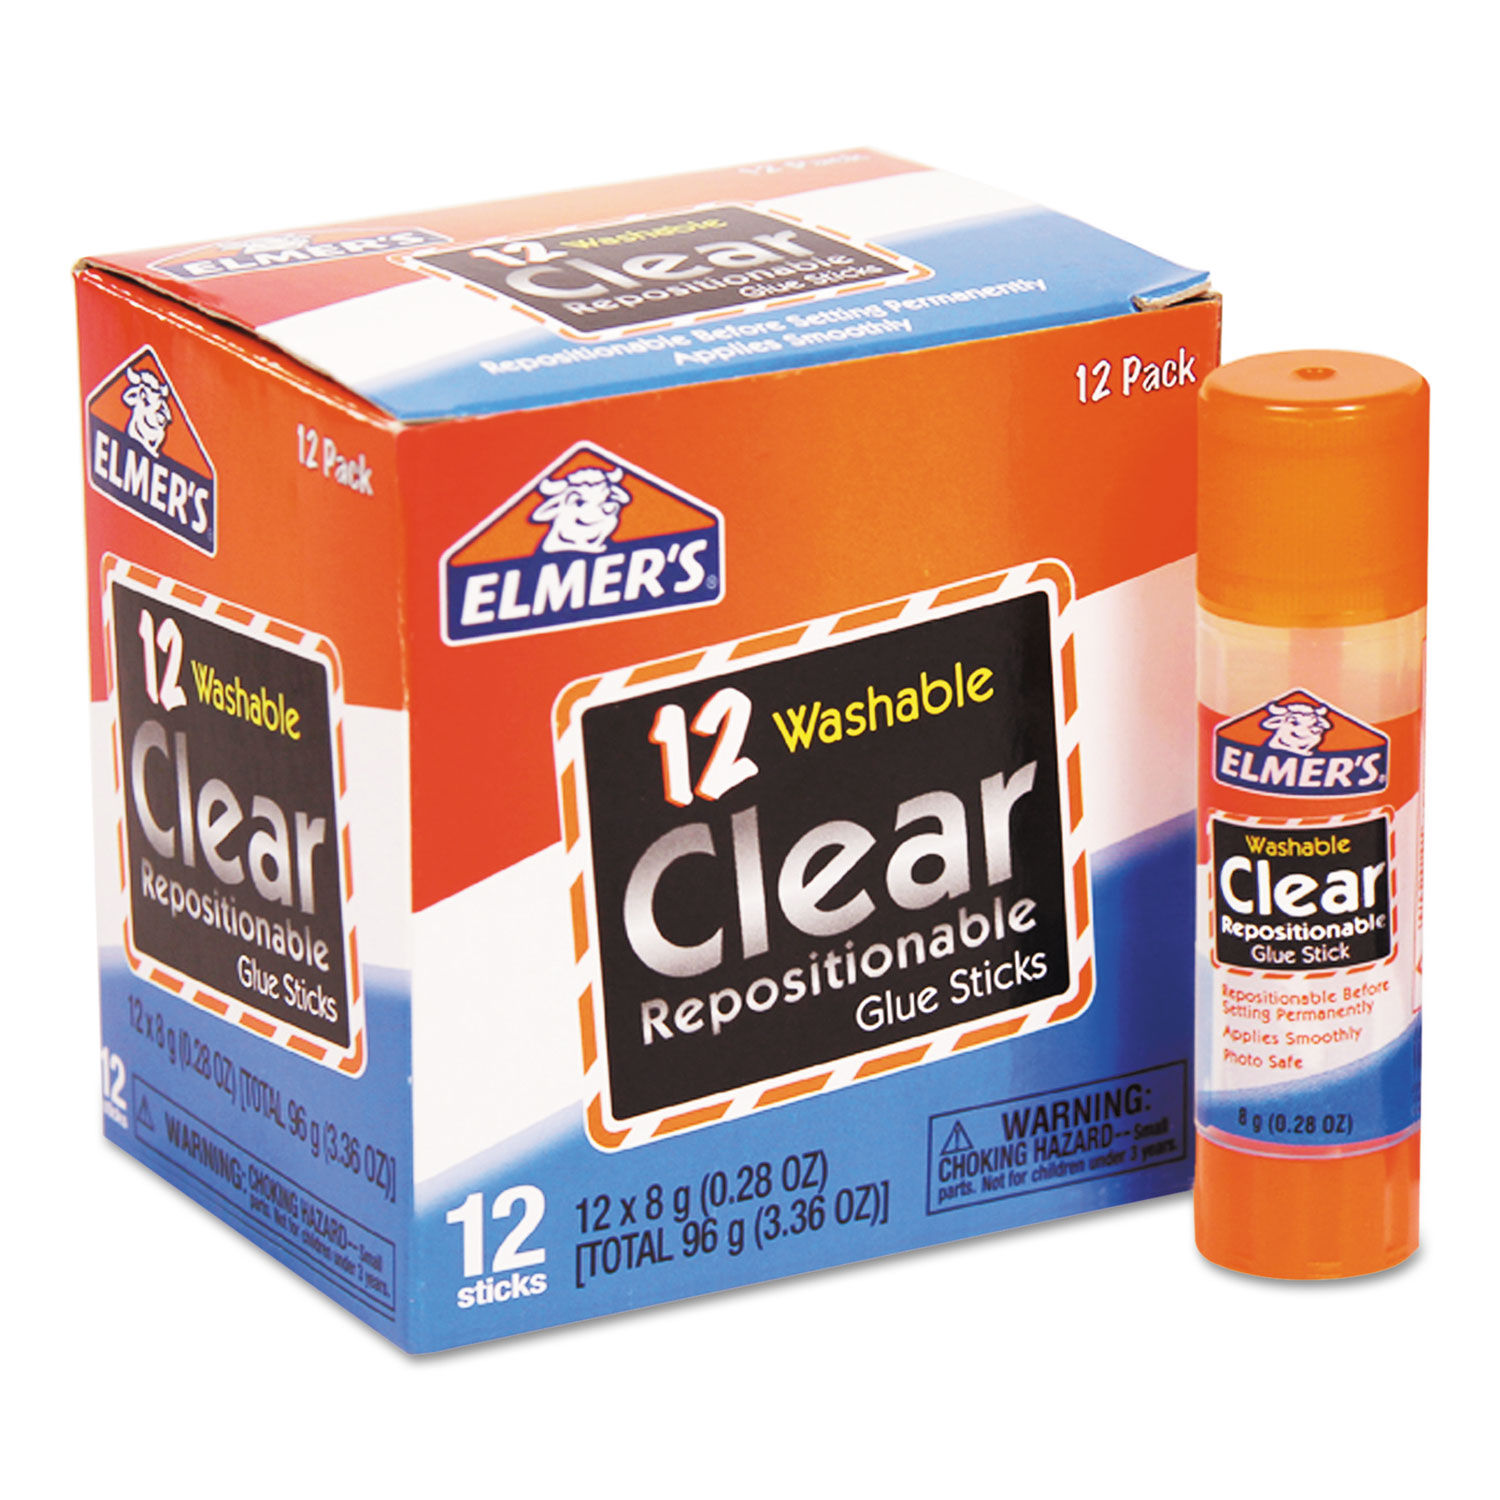 Washable School Glue Sticks, 0.24 oz, Applies and Dries Clear, 30/Box